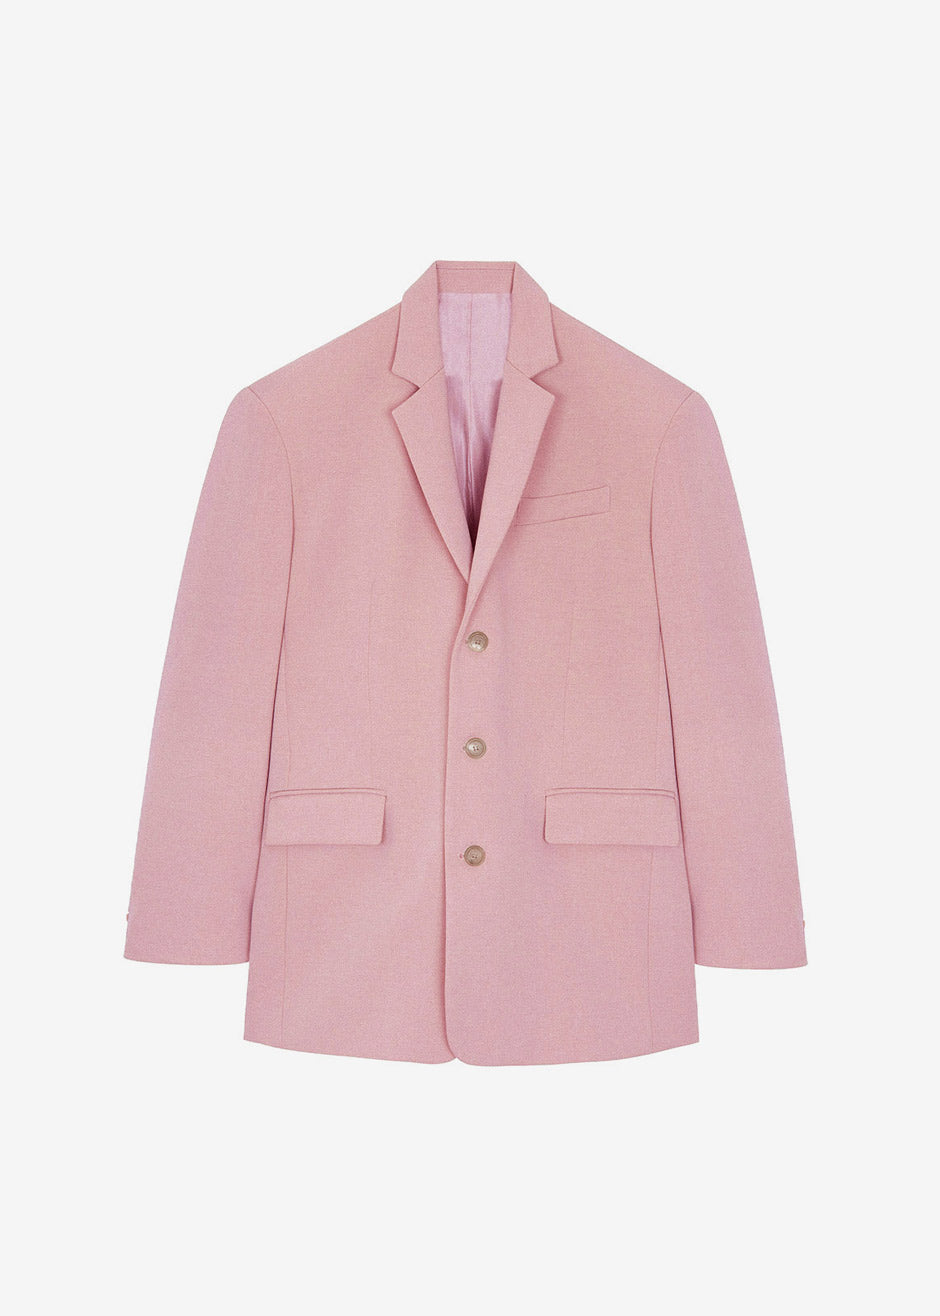 SALE: Hot Pink Oversize Blazer, Jenerique